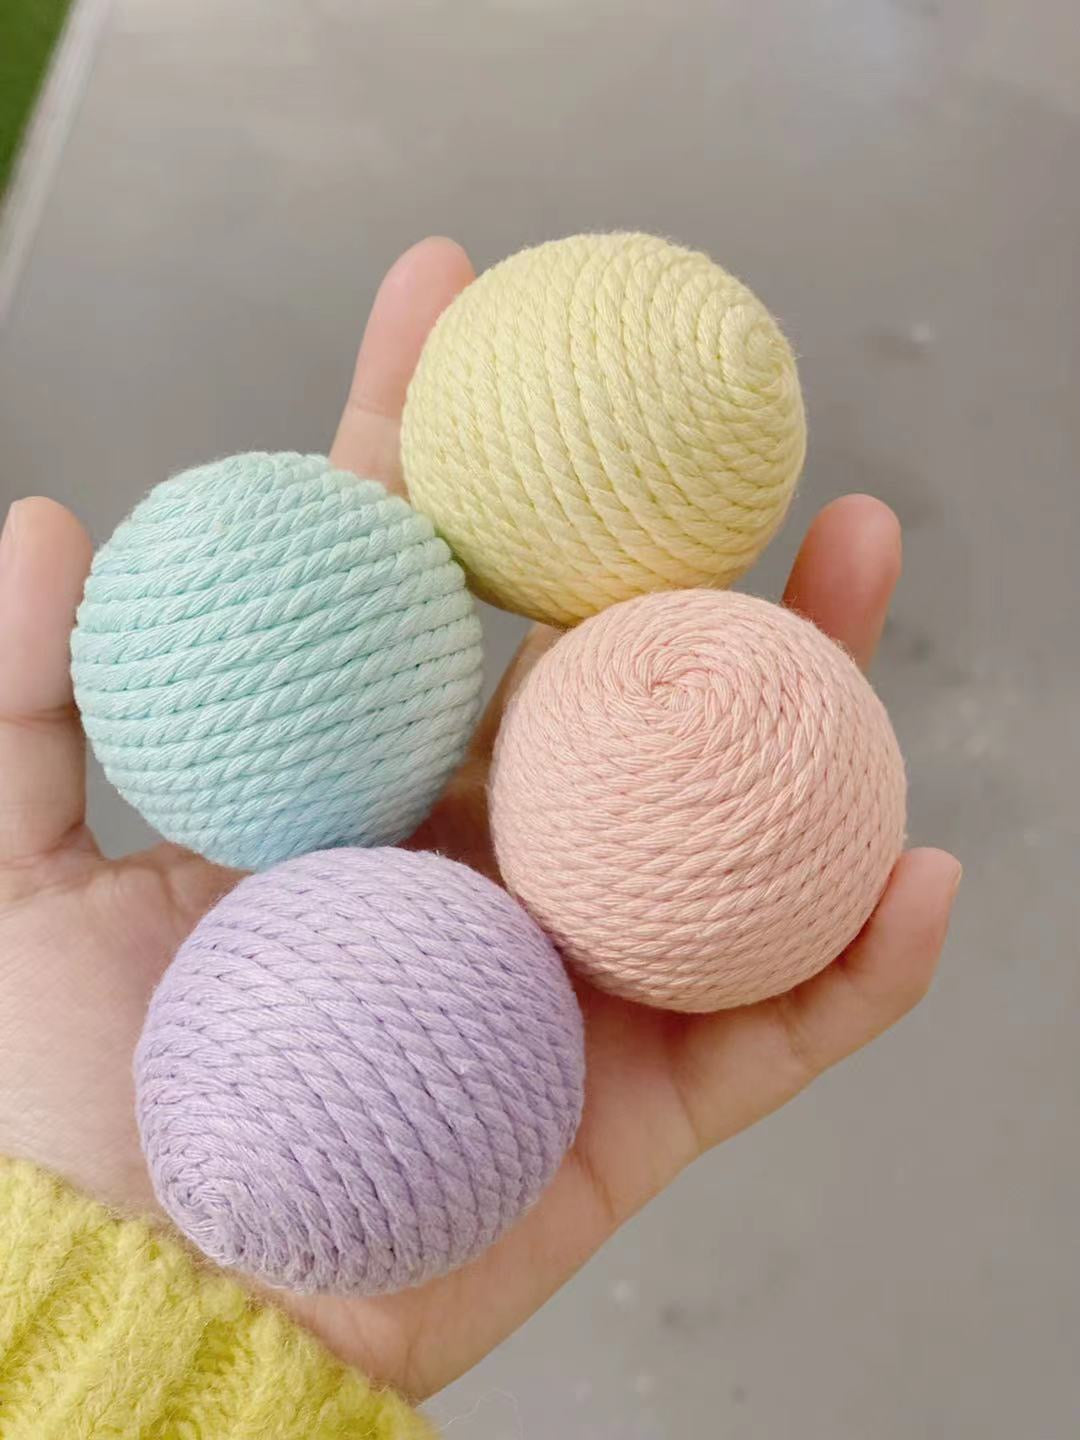 L Cotton Rope Macaron Balls Toy